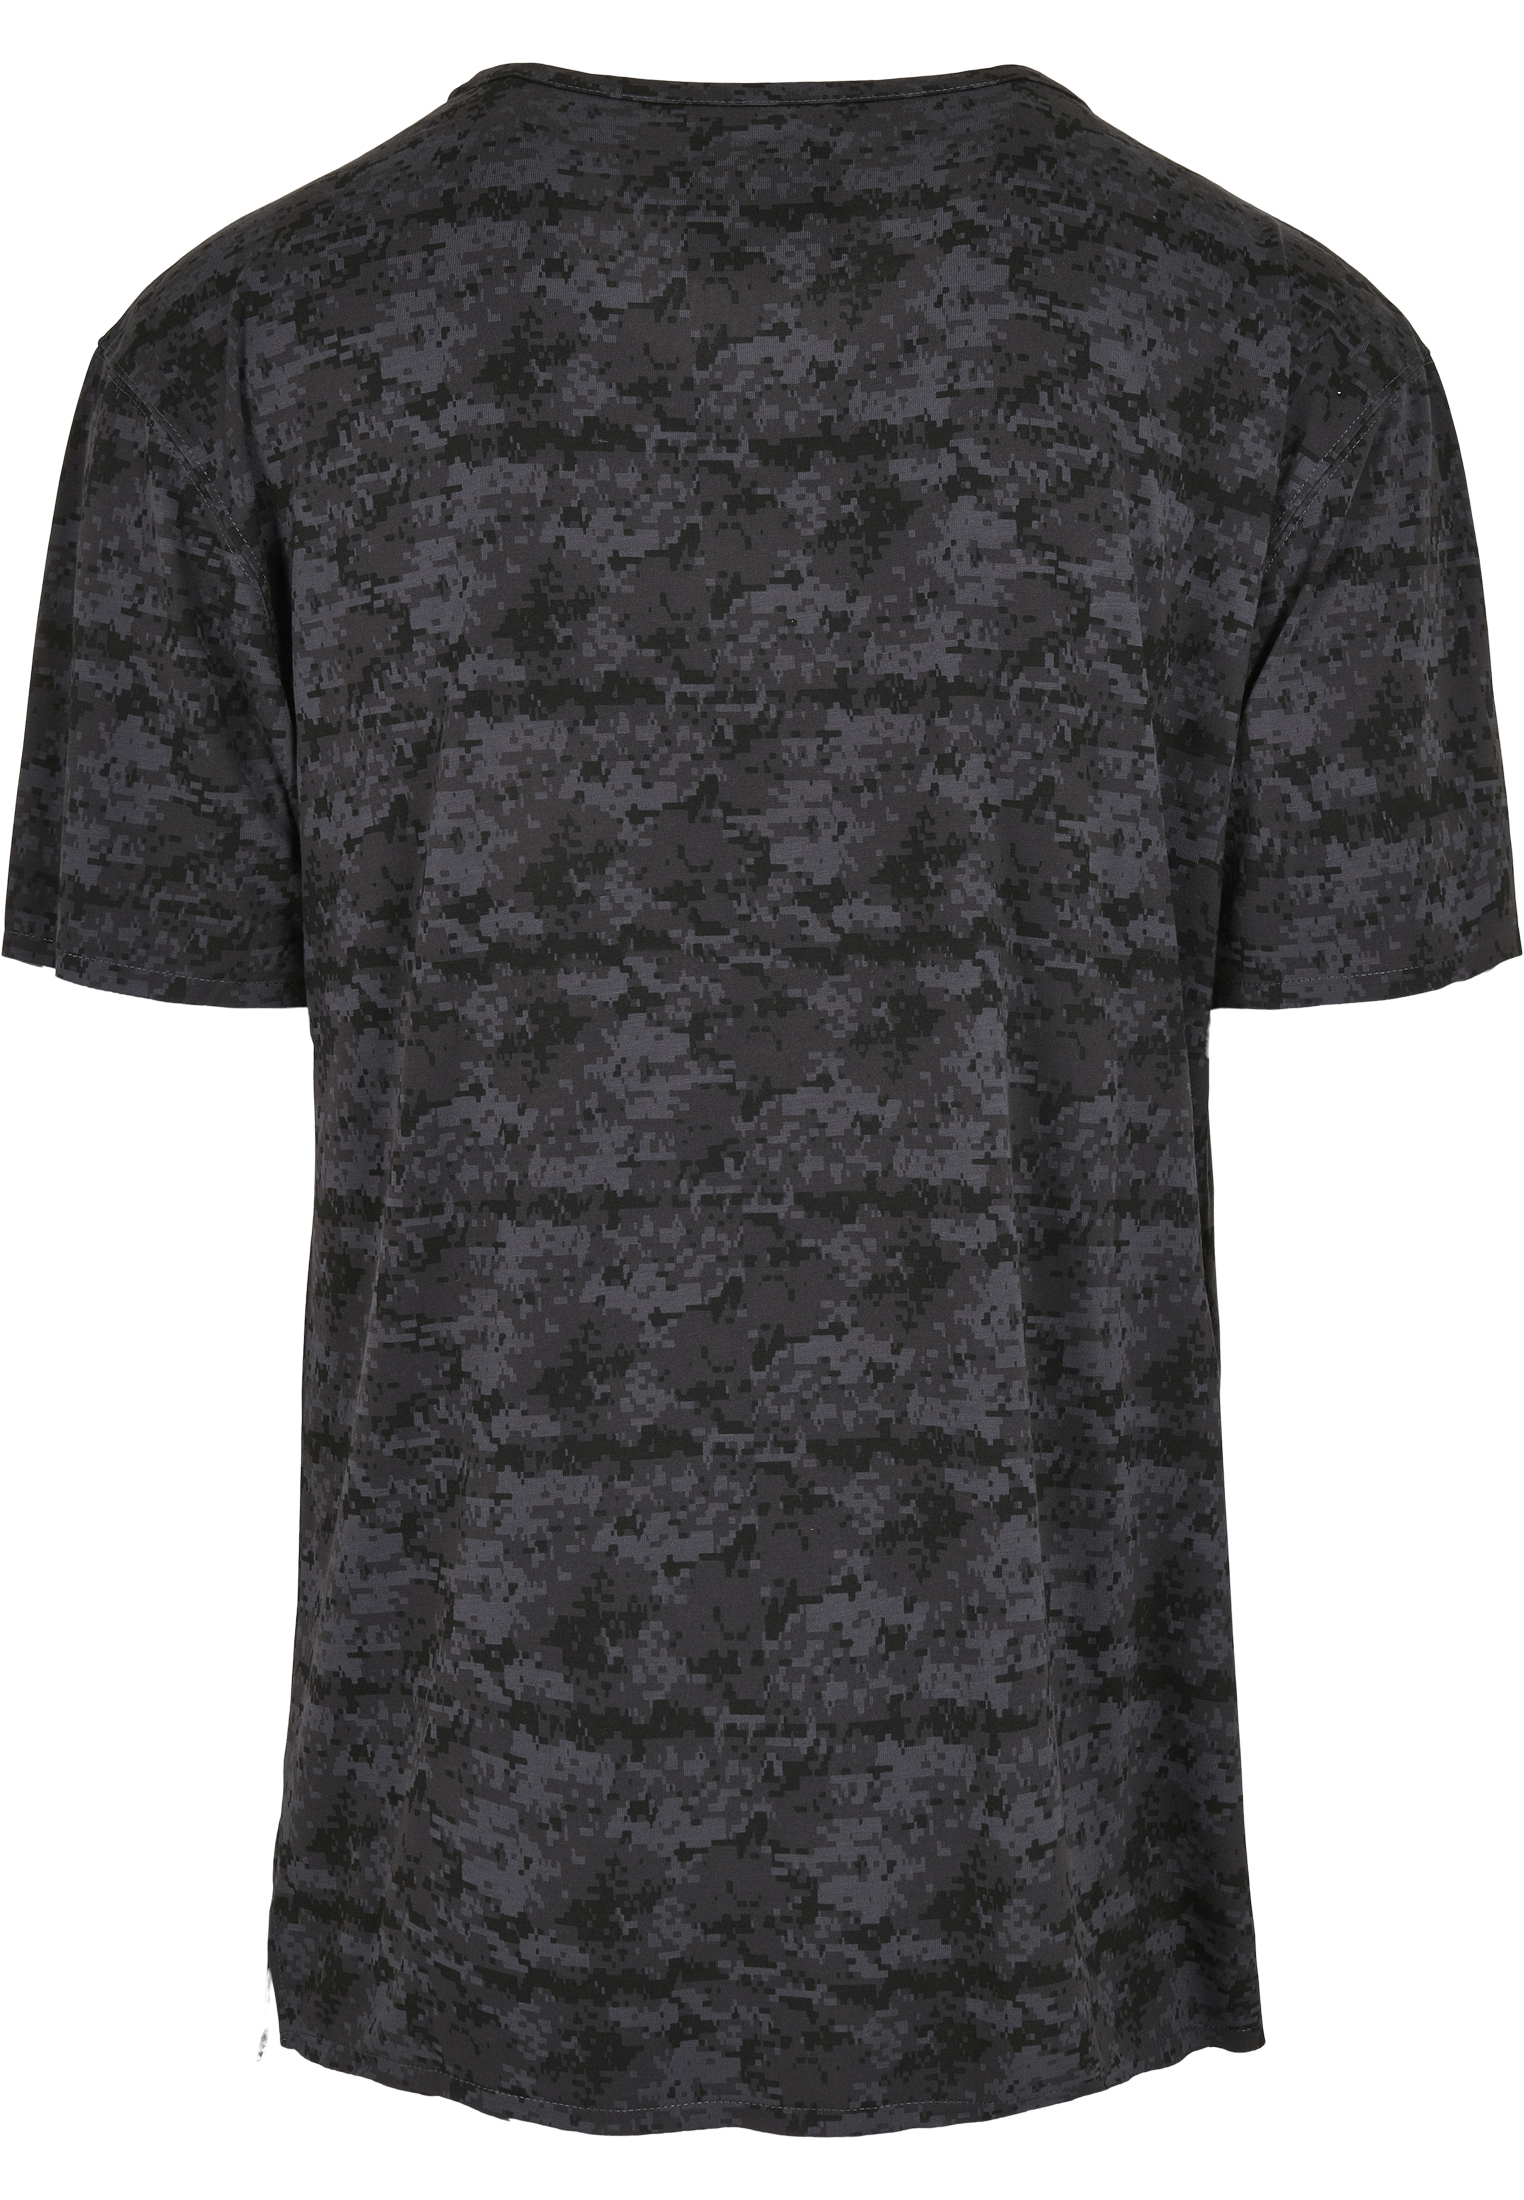 T-Shirts CSBL Deuces Long Layer Tee in Farbe black digi camo